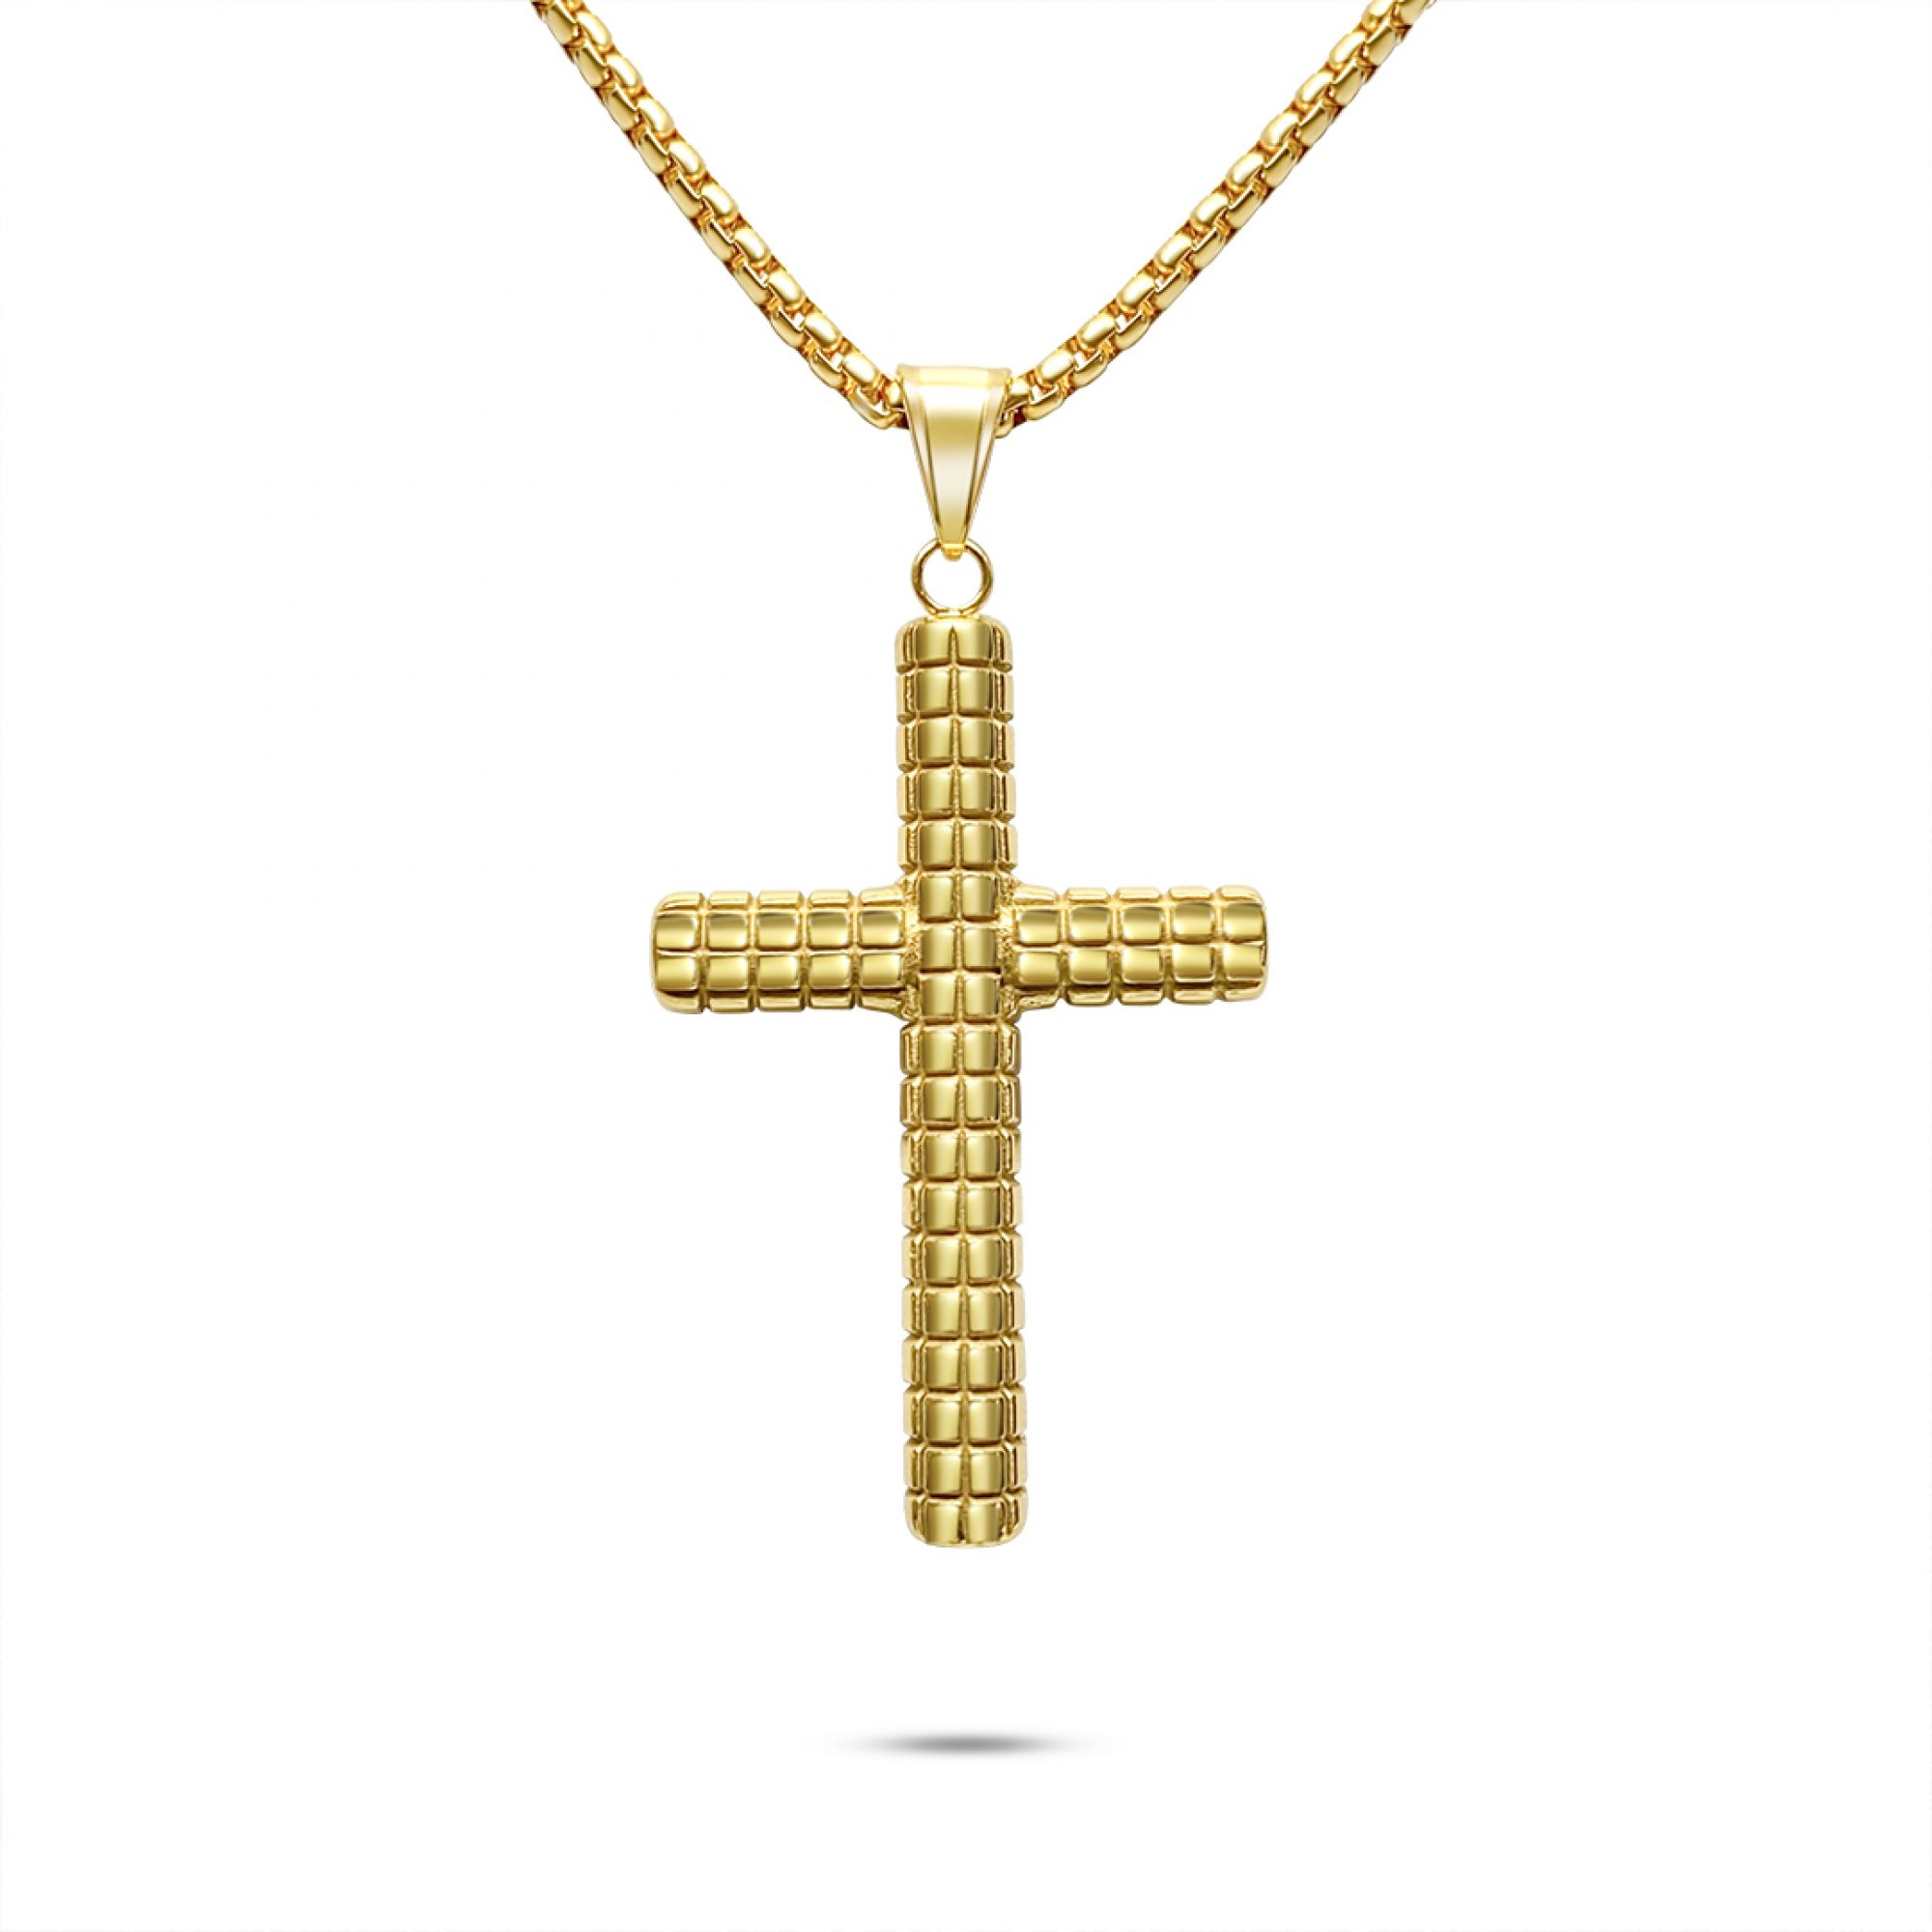 Steel cross necklace